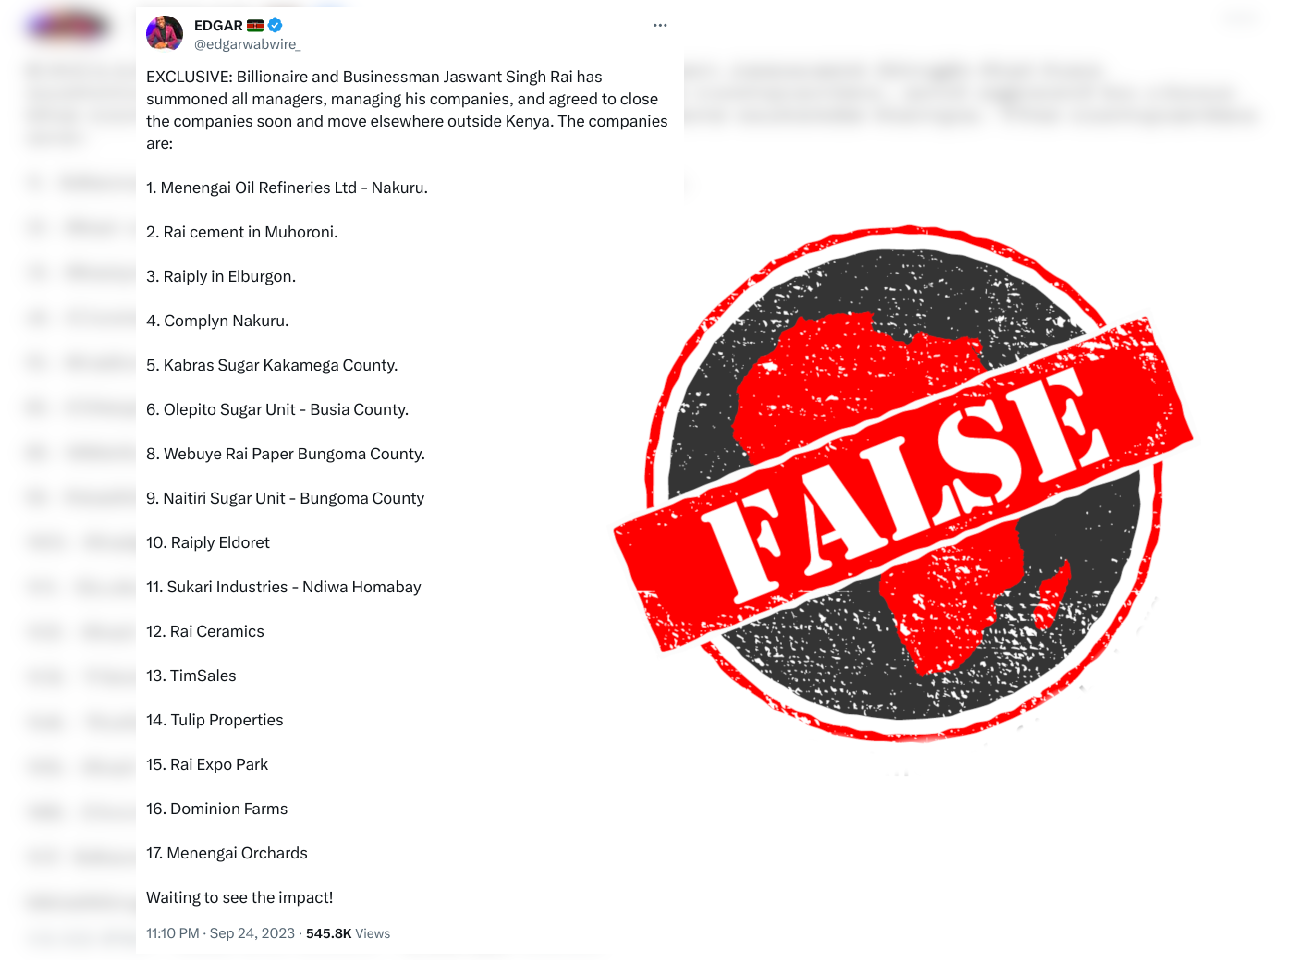 False post about the Rai Group